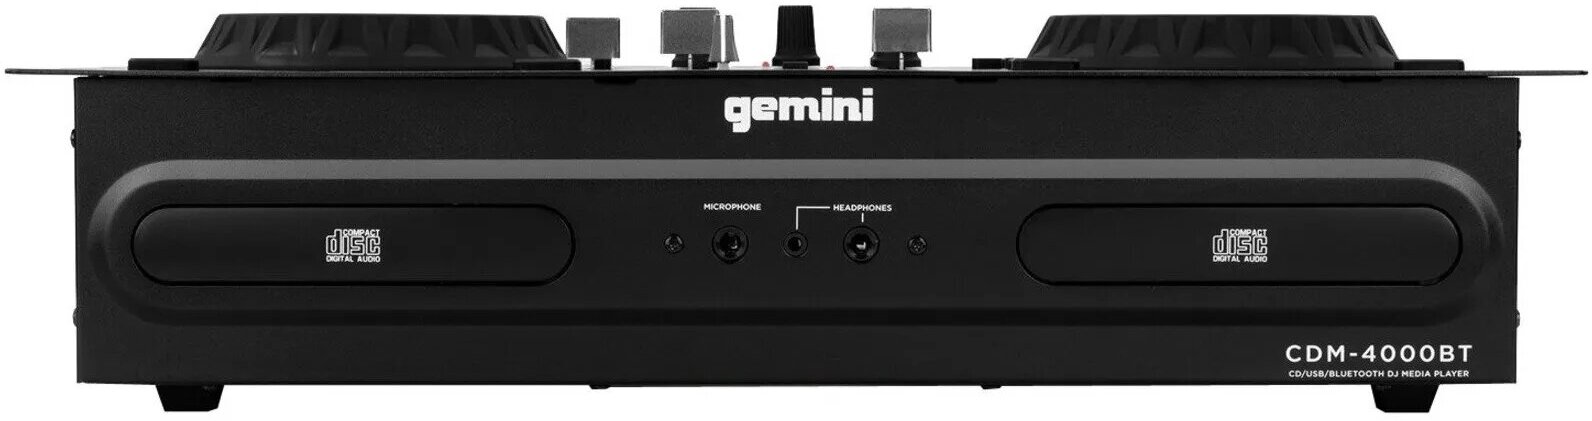 DJ станции комплекты контроллеры Gemini CDM-4000BT